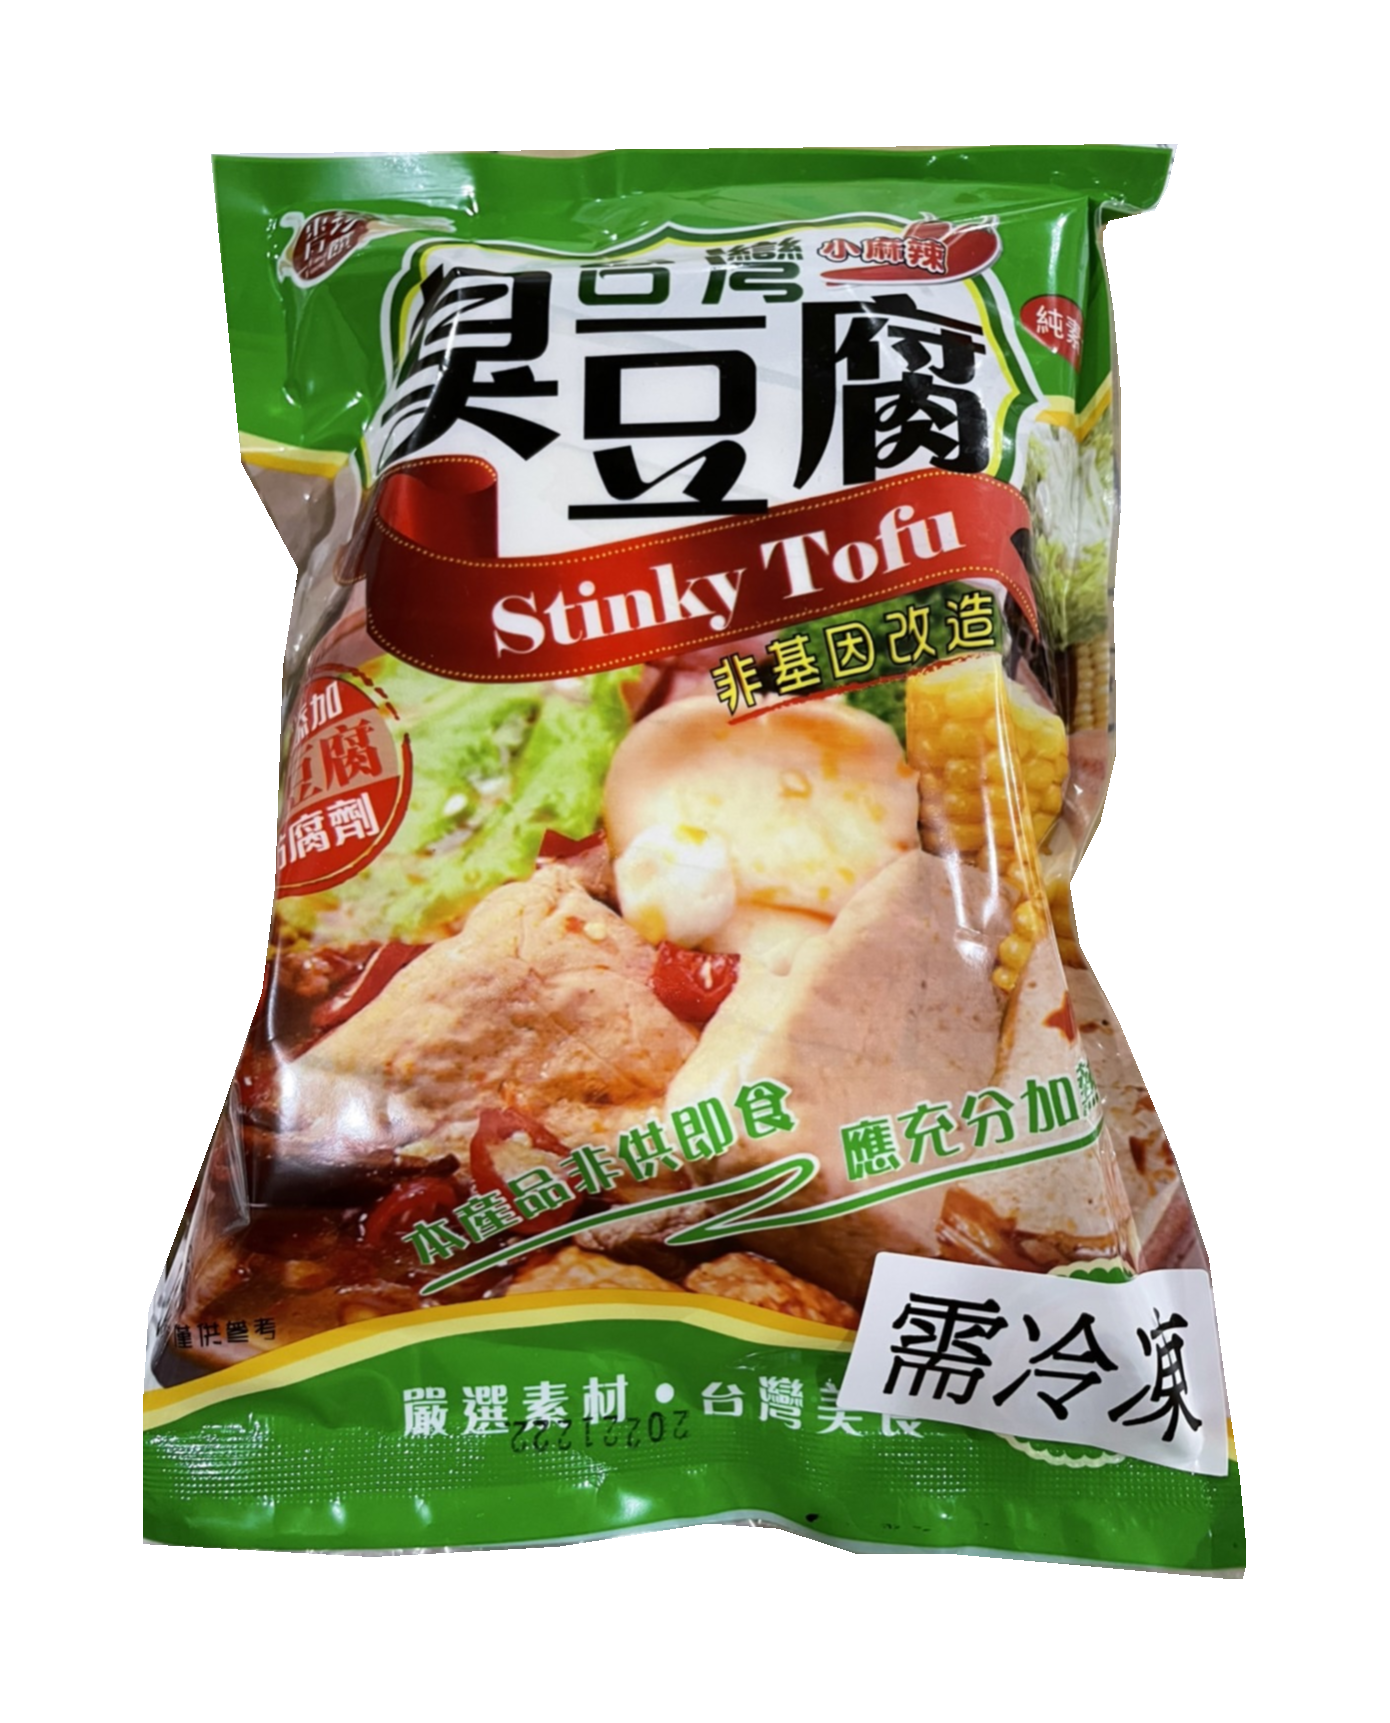 EastFood Vegetarian Stinky Tofu 東方珍饌 台灣臭豆腐